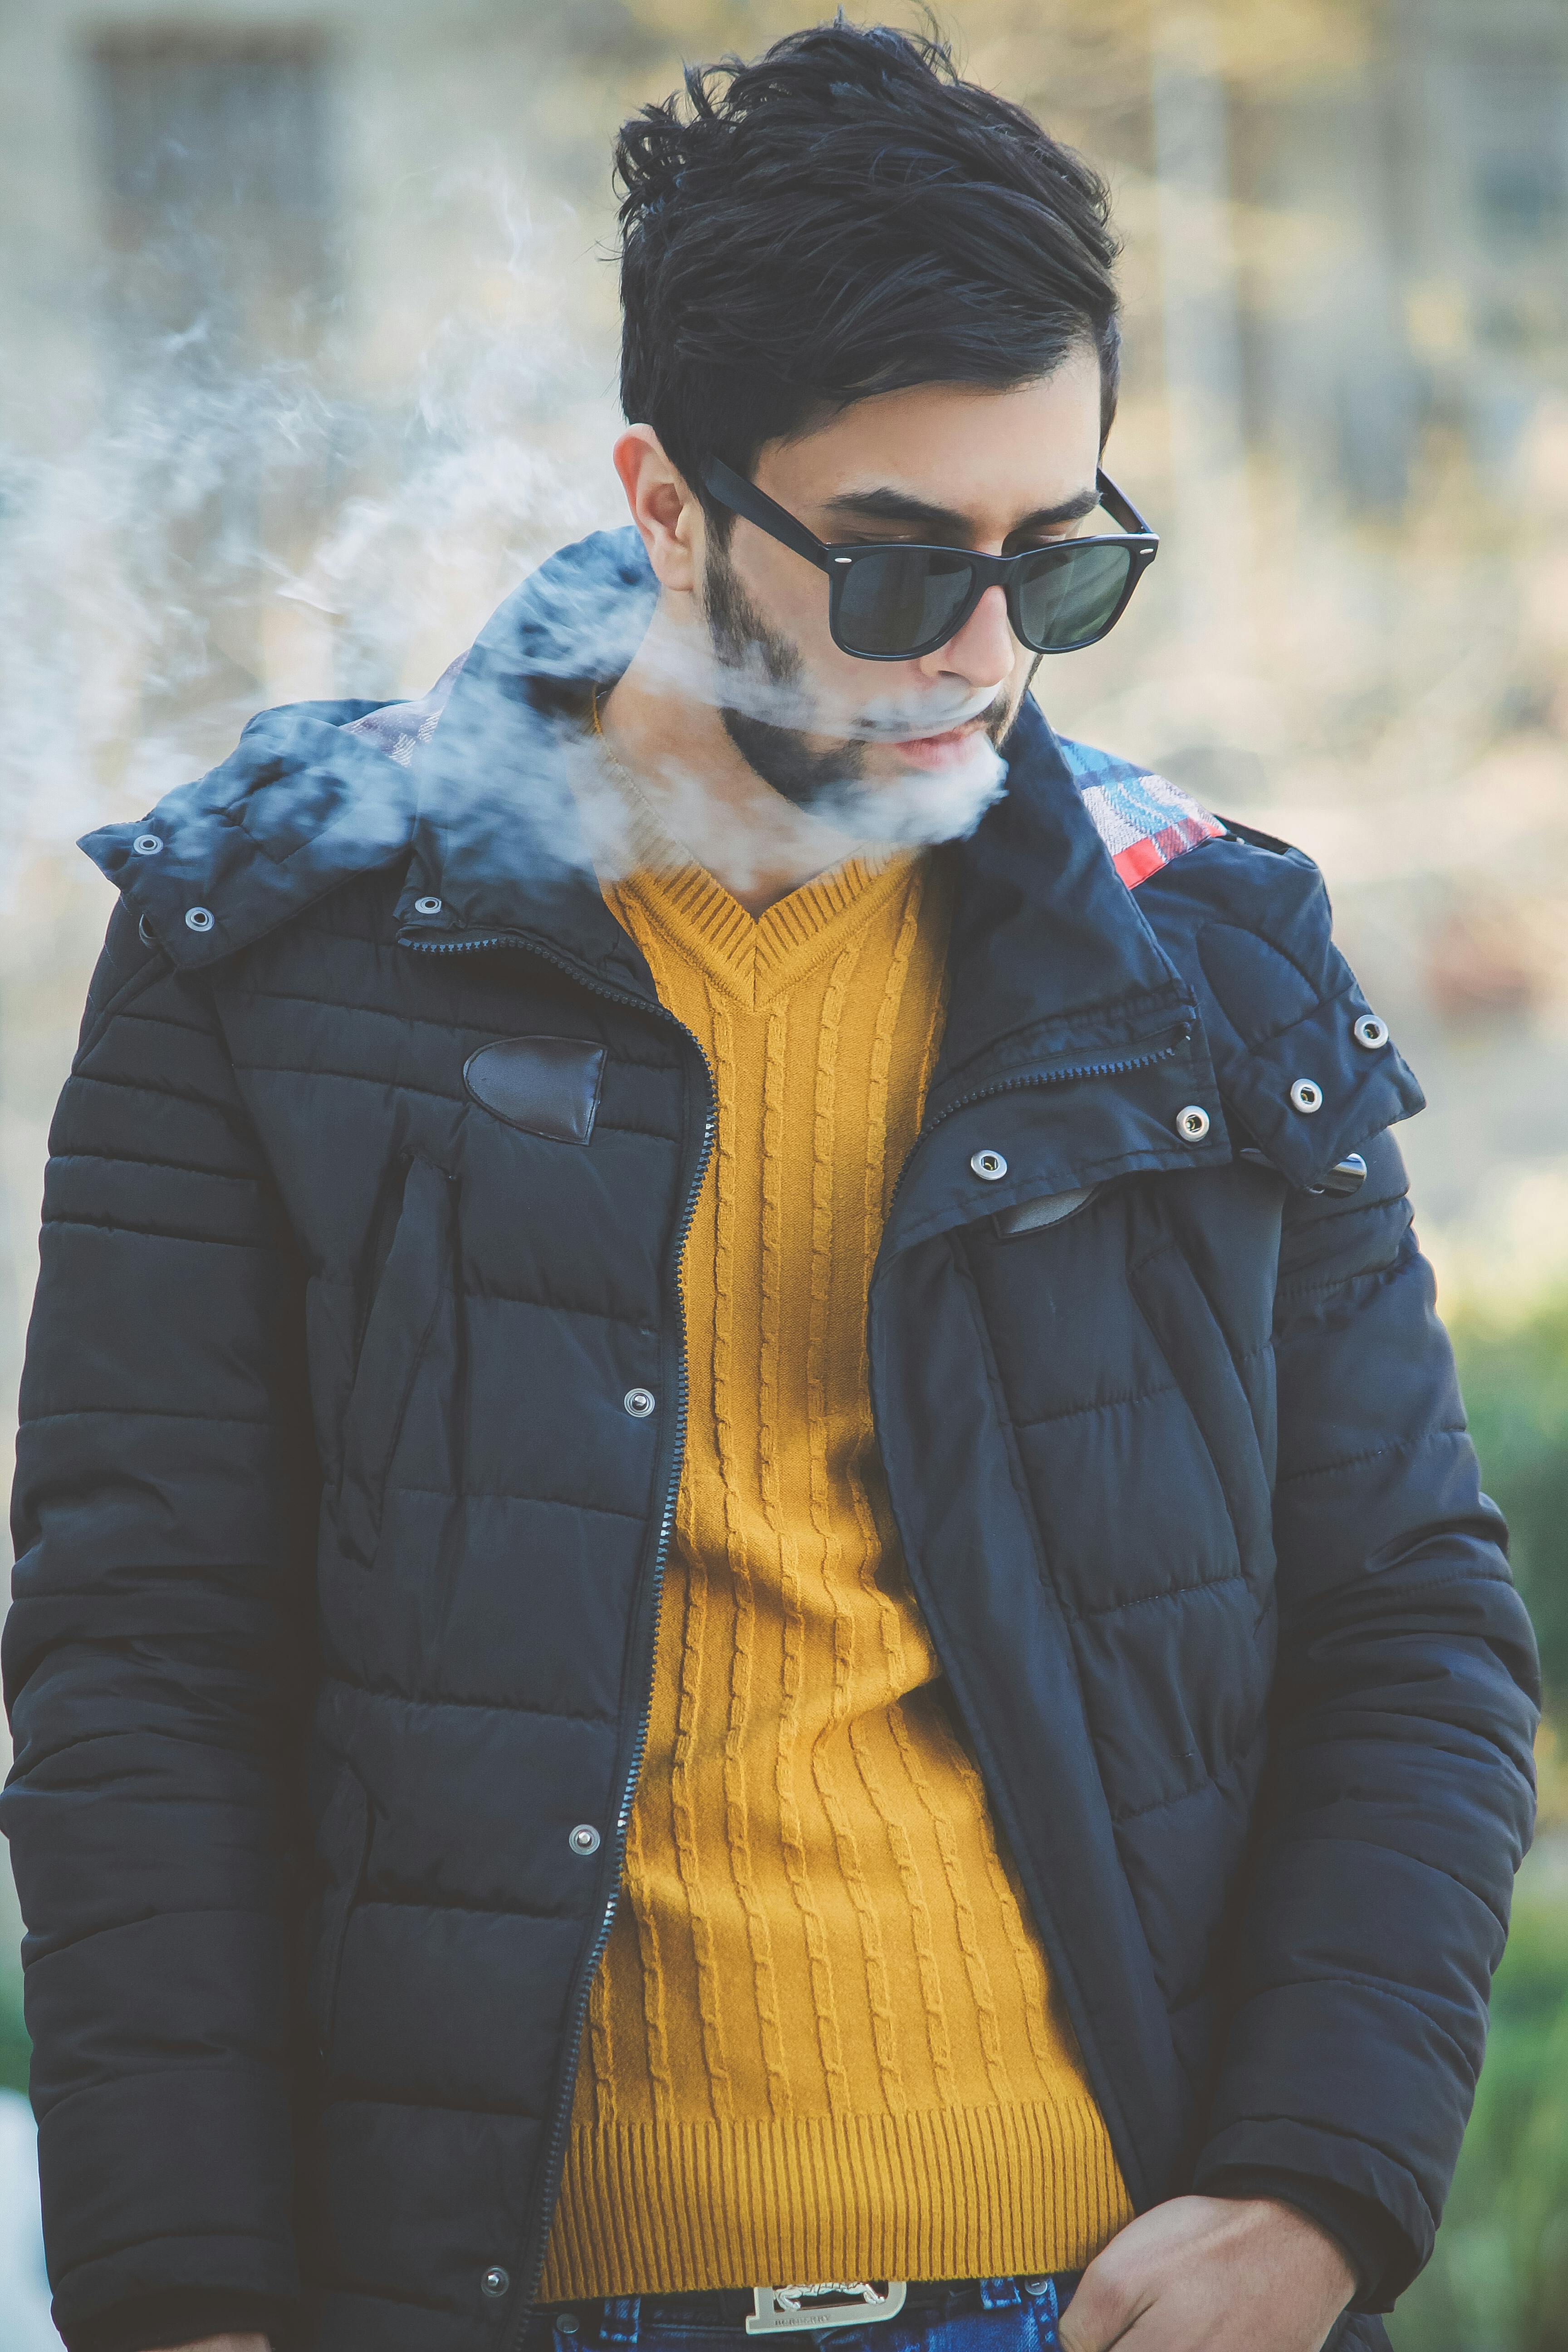 Man Smoking Cigarette · Free Stock Photo